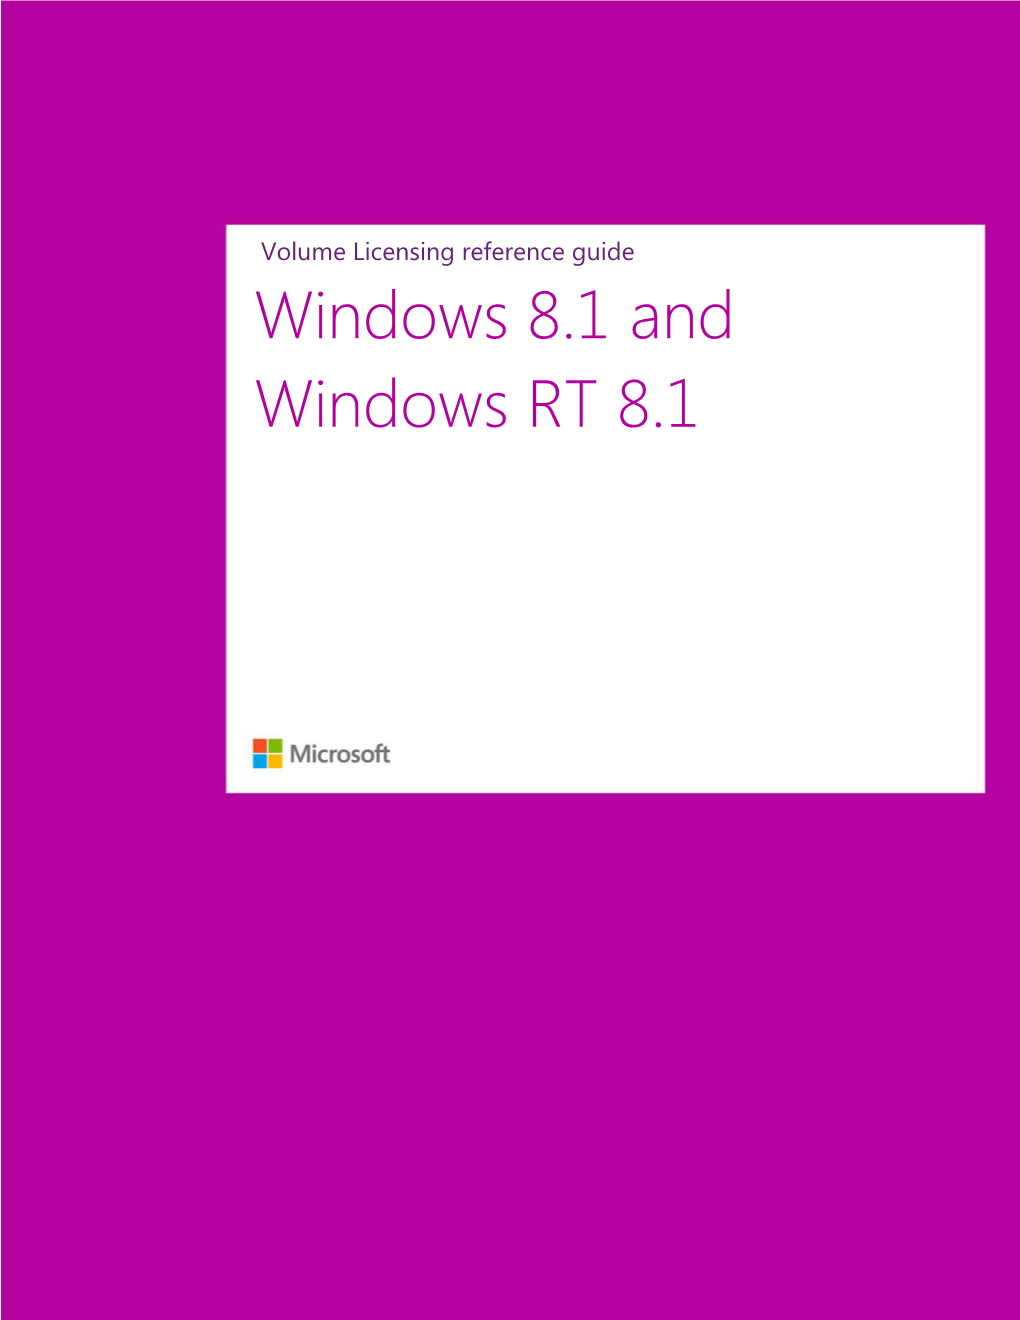 Windows 8.1 and Windows RT 8.1